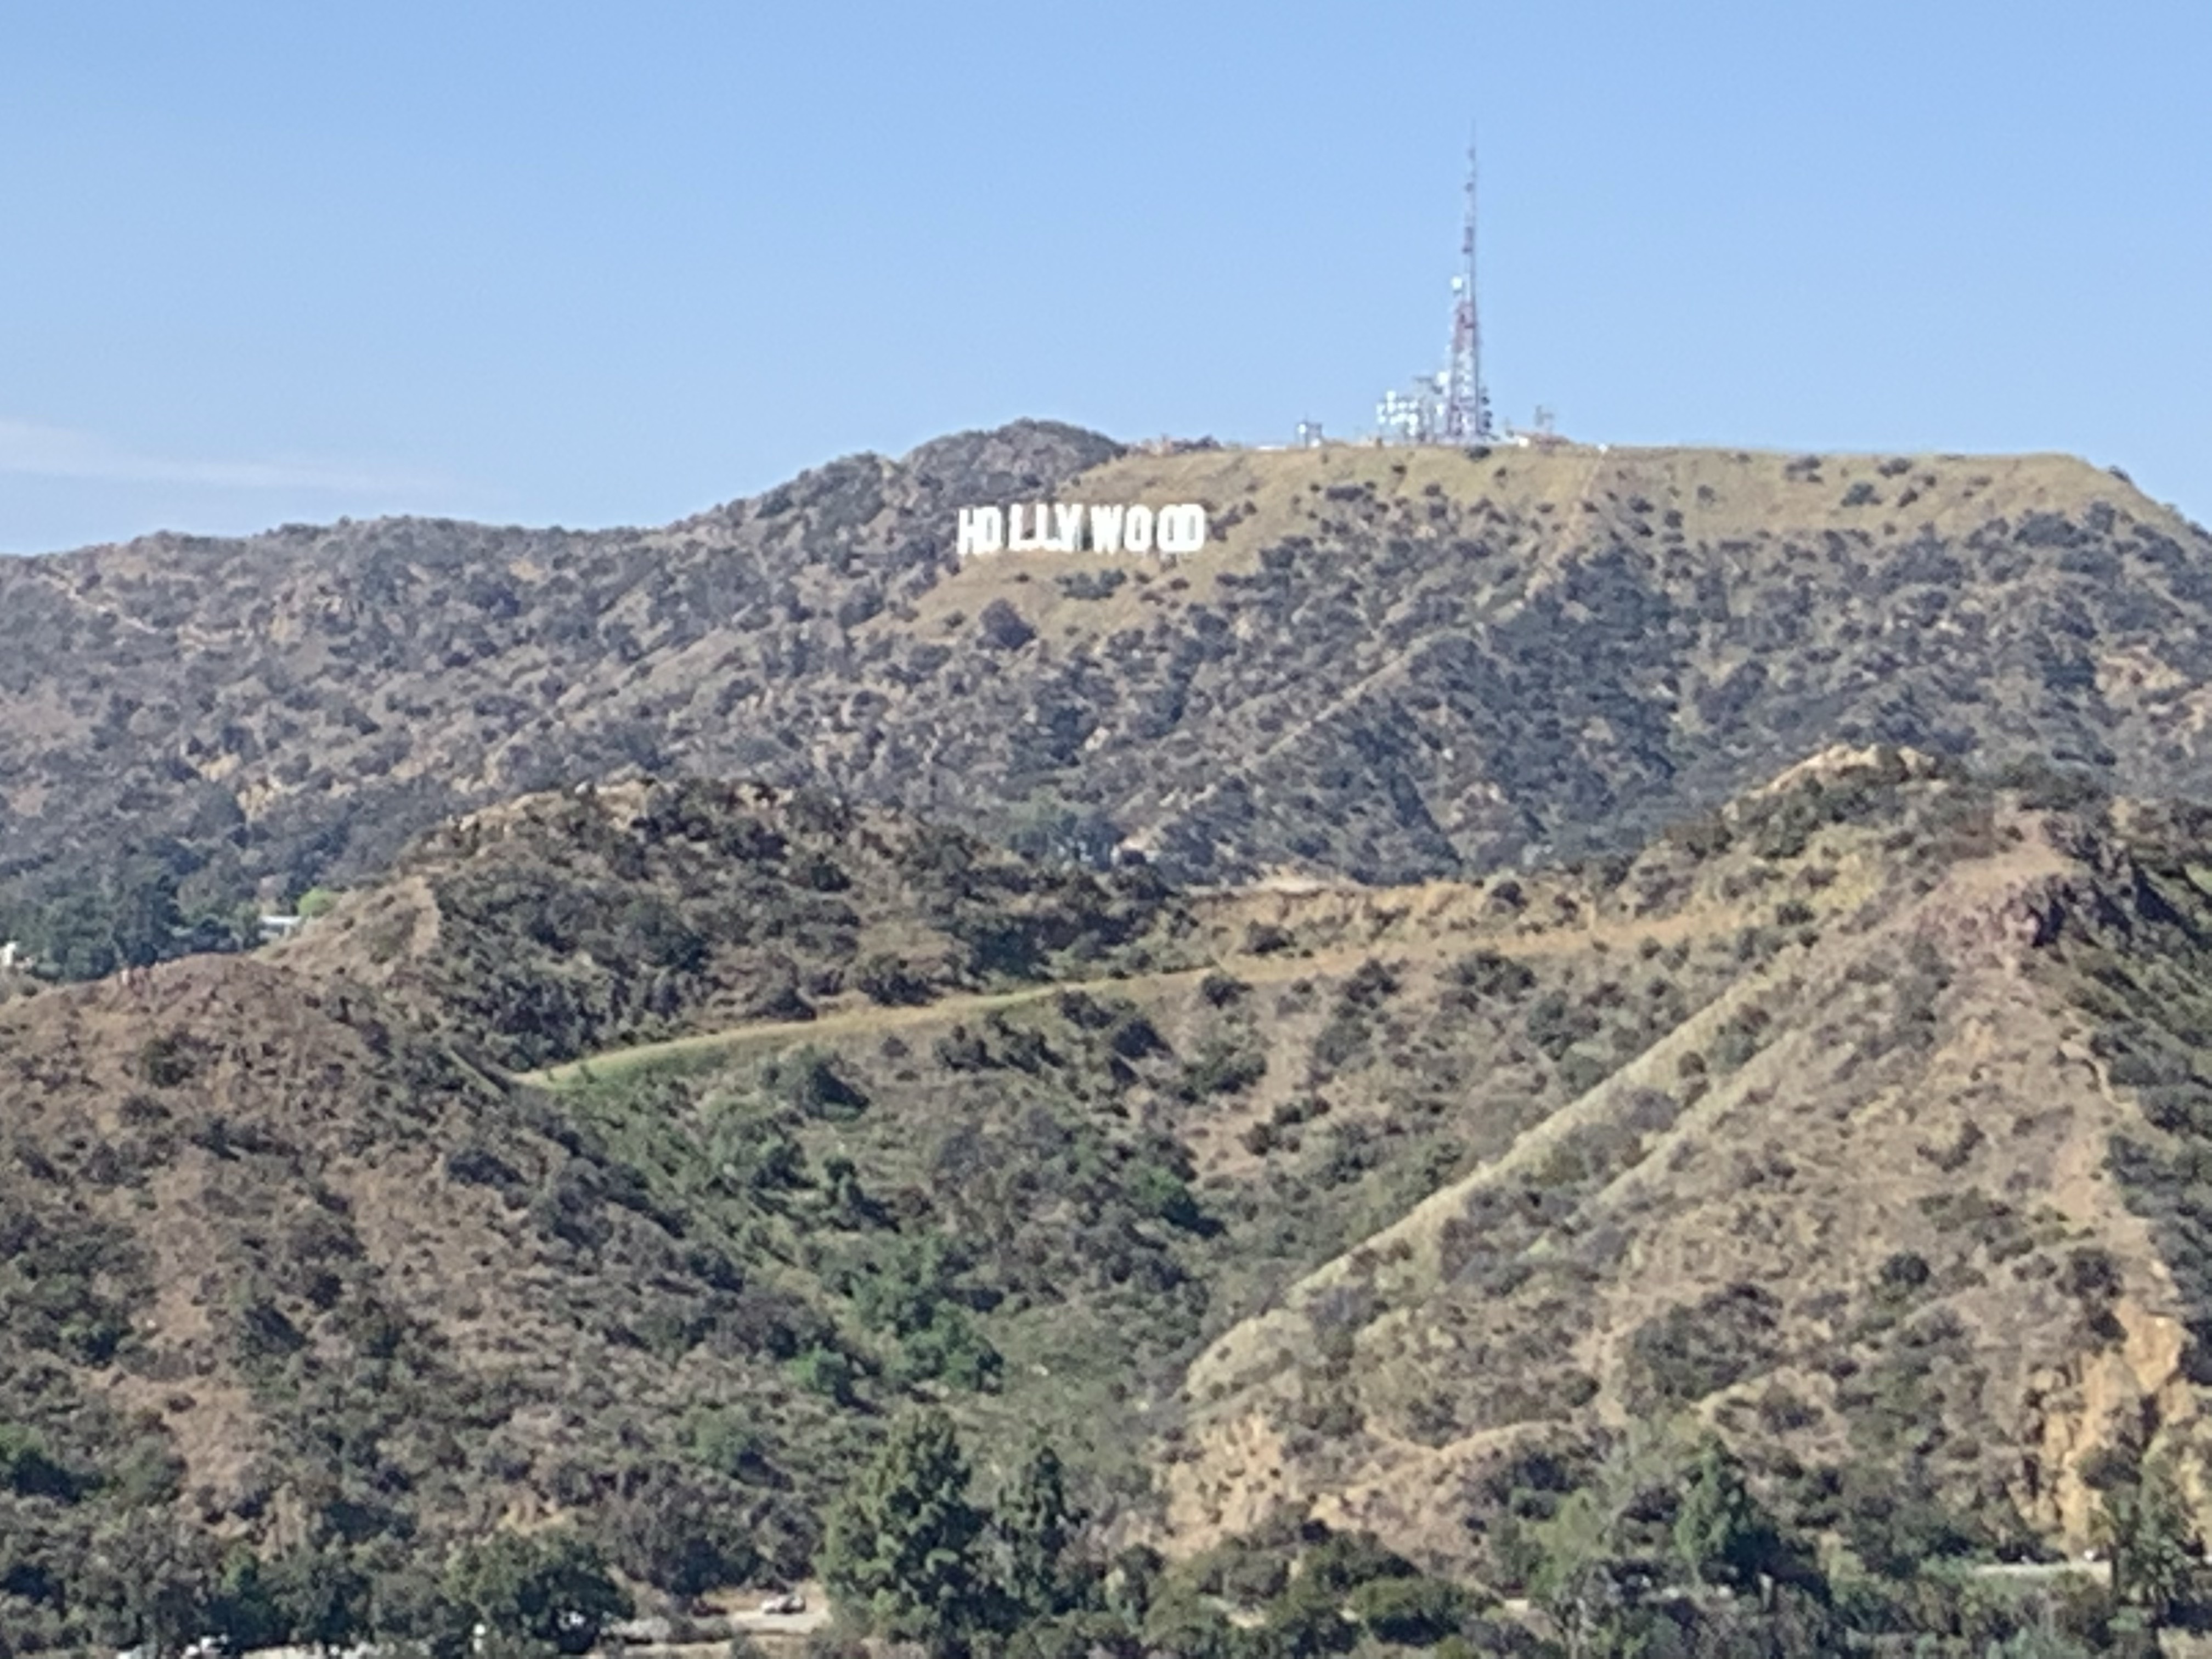 LA - Iconic Hollywood sign